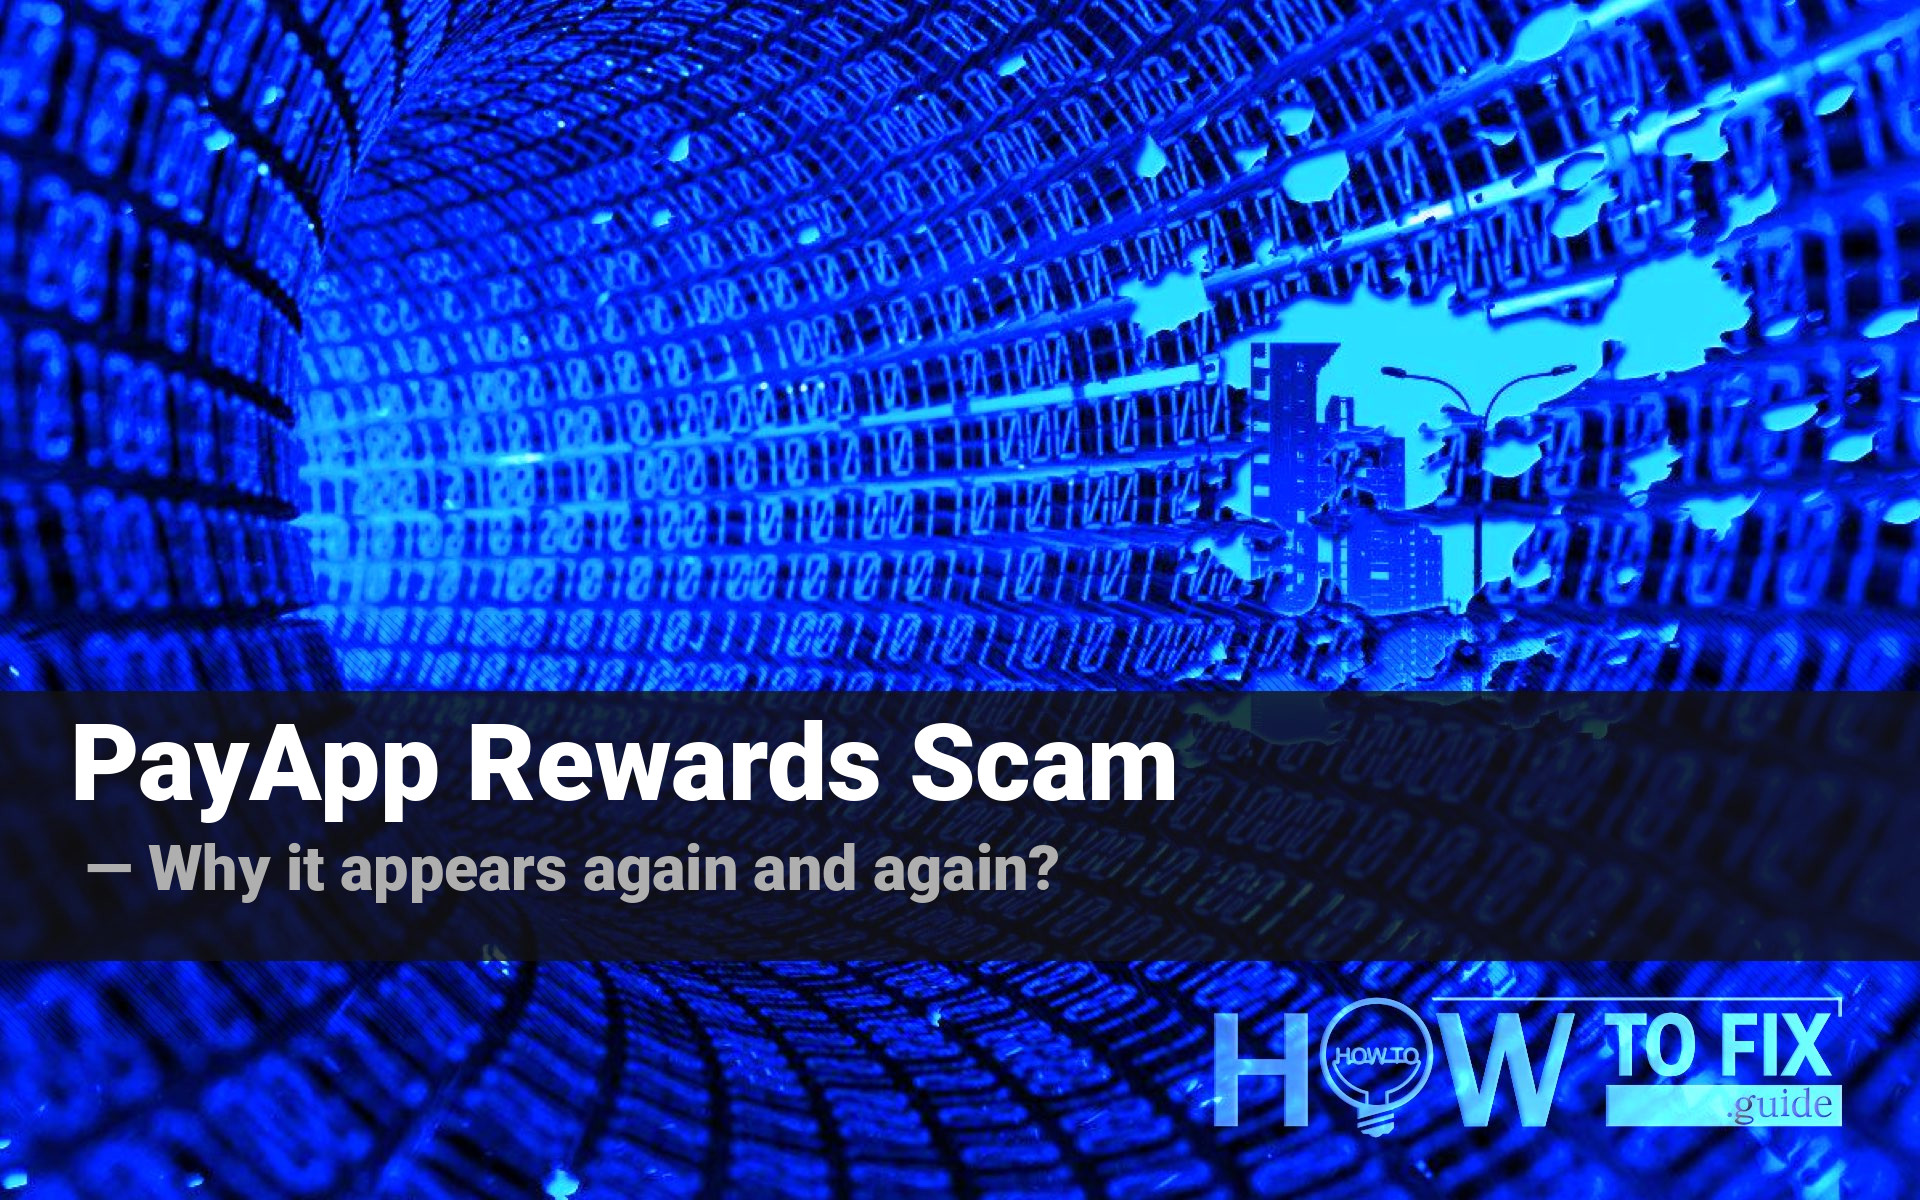 PayApp Rewards Scam. What is that fraud?